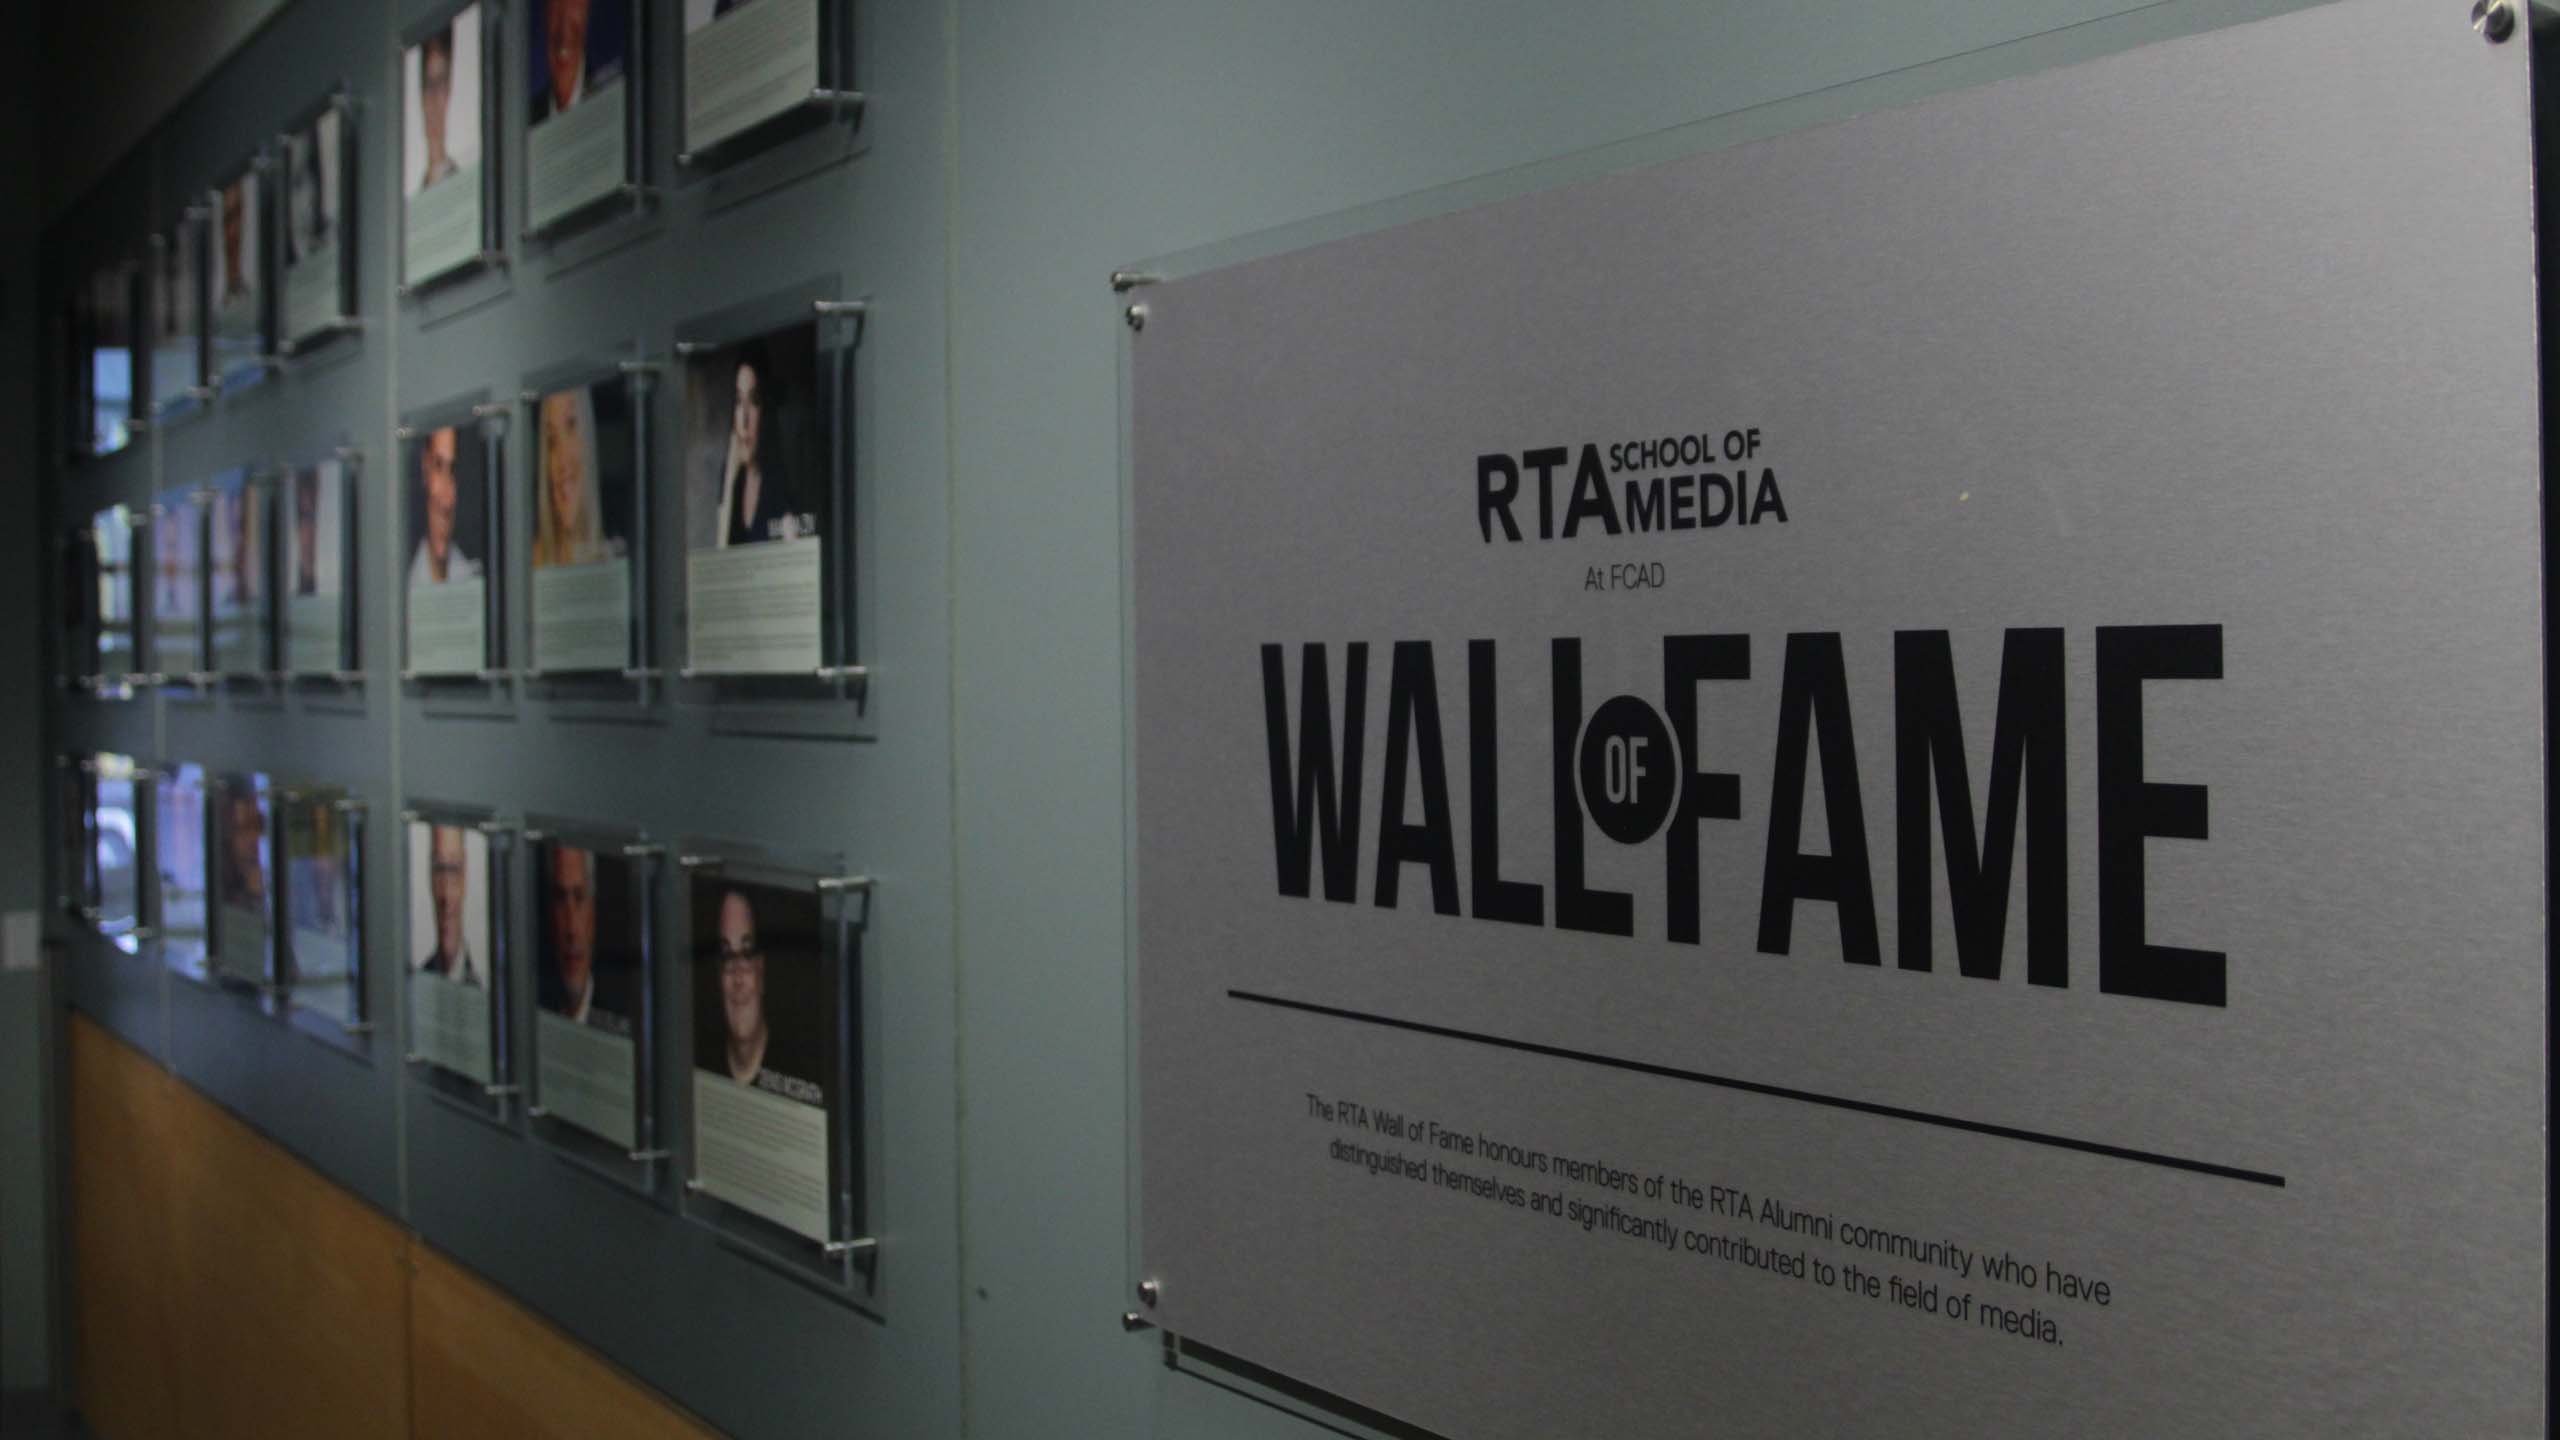 Ryerson's rta school of media Wall of Fame